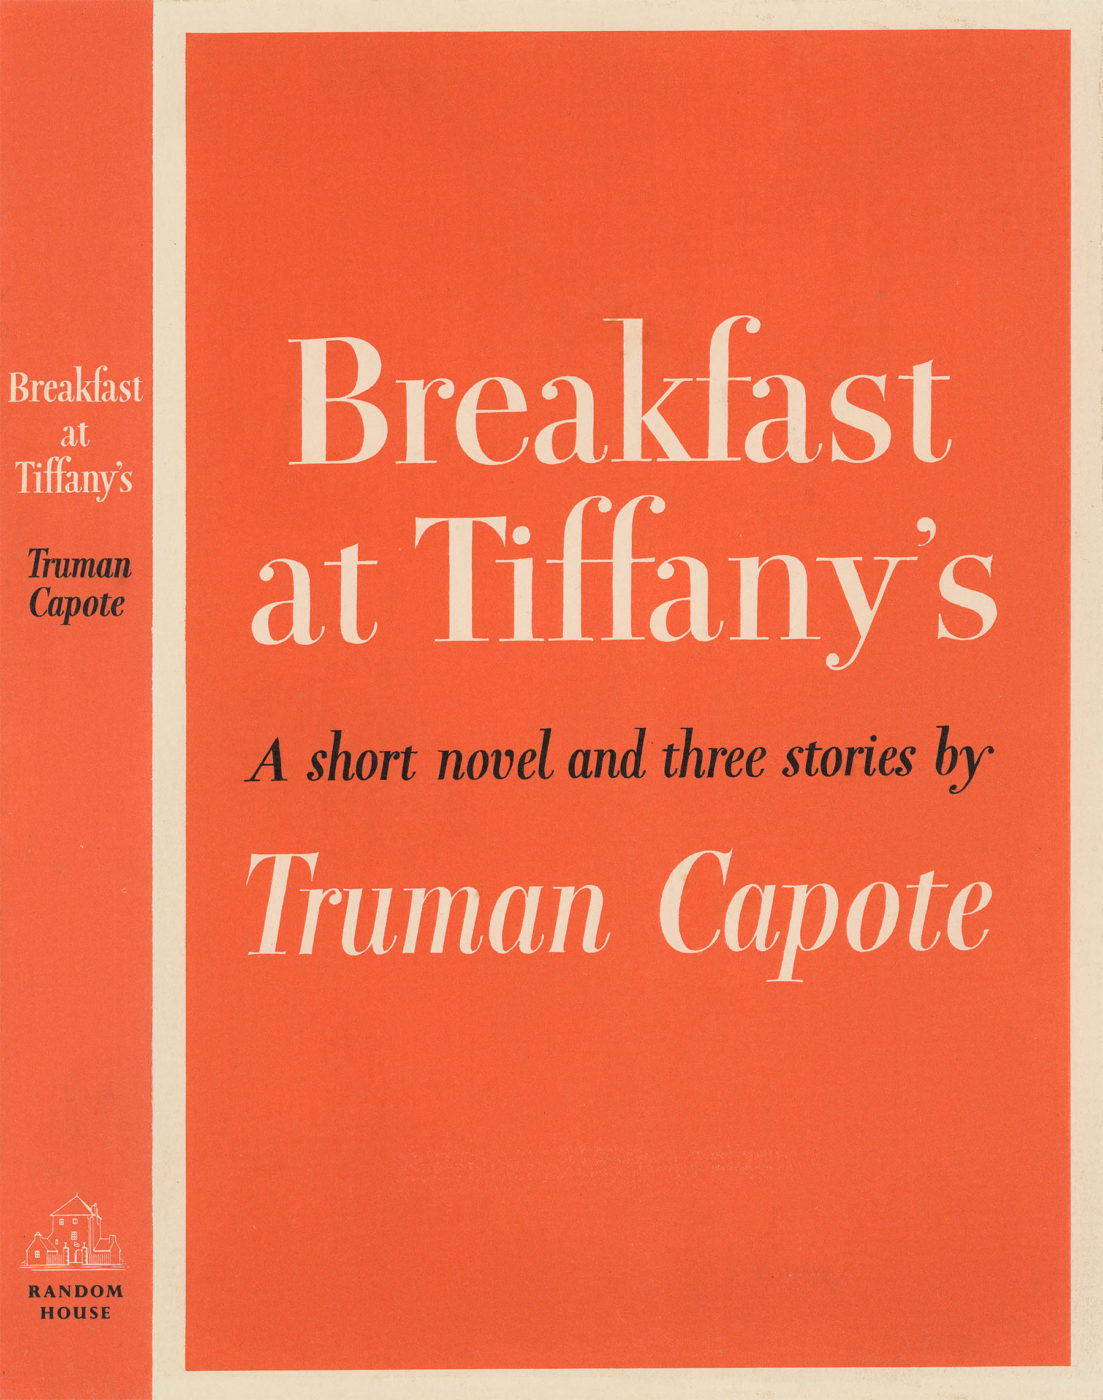 Book jacket of Breakfast at Tiffany’s